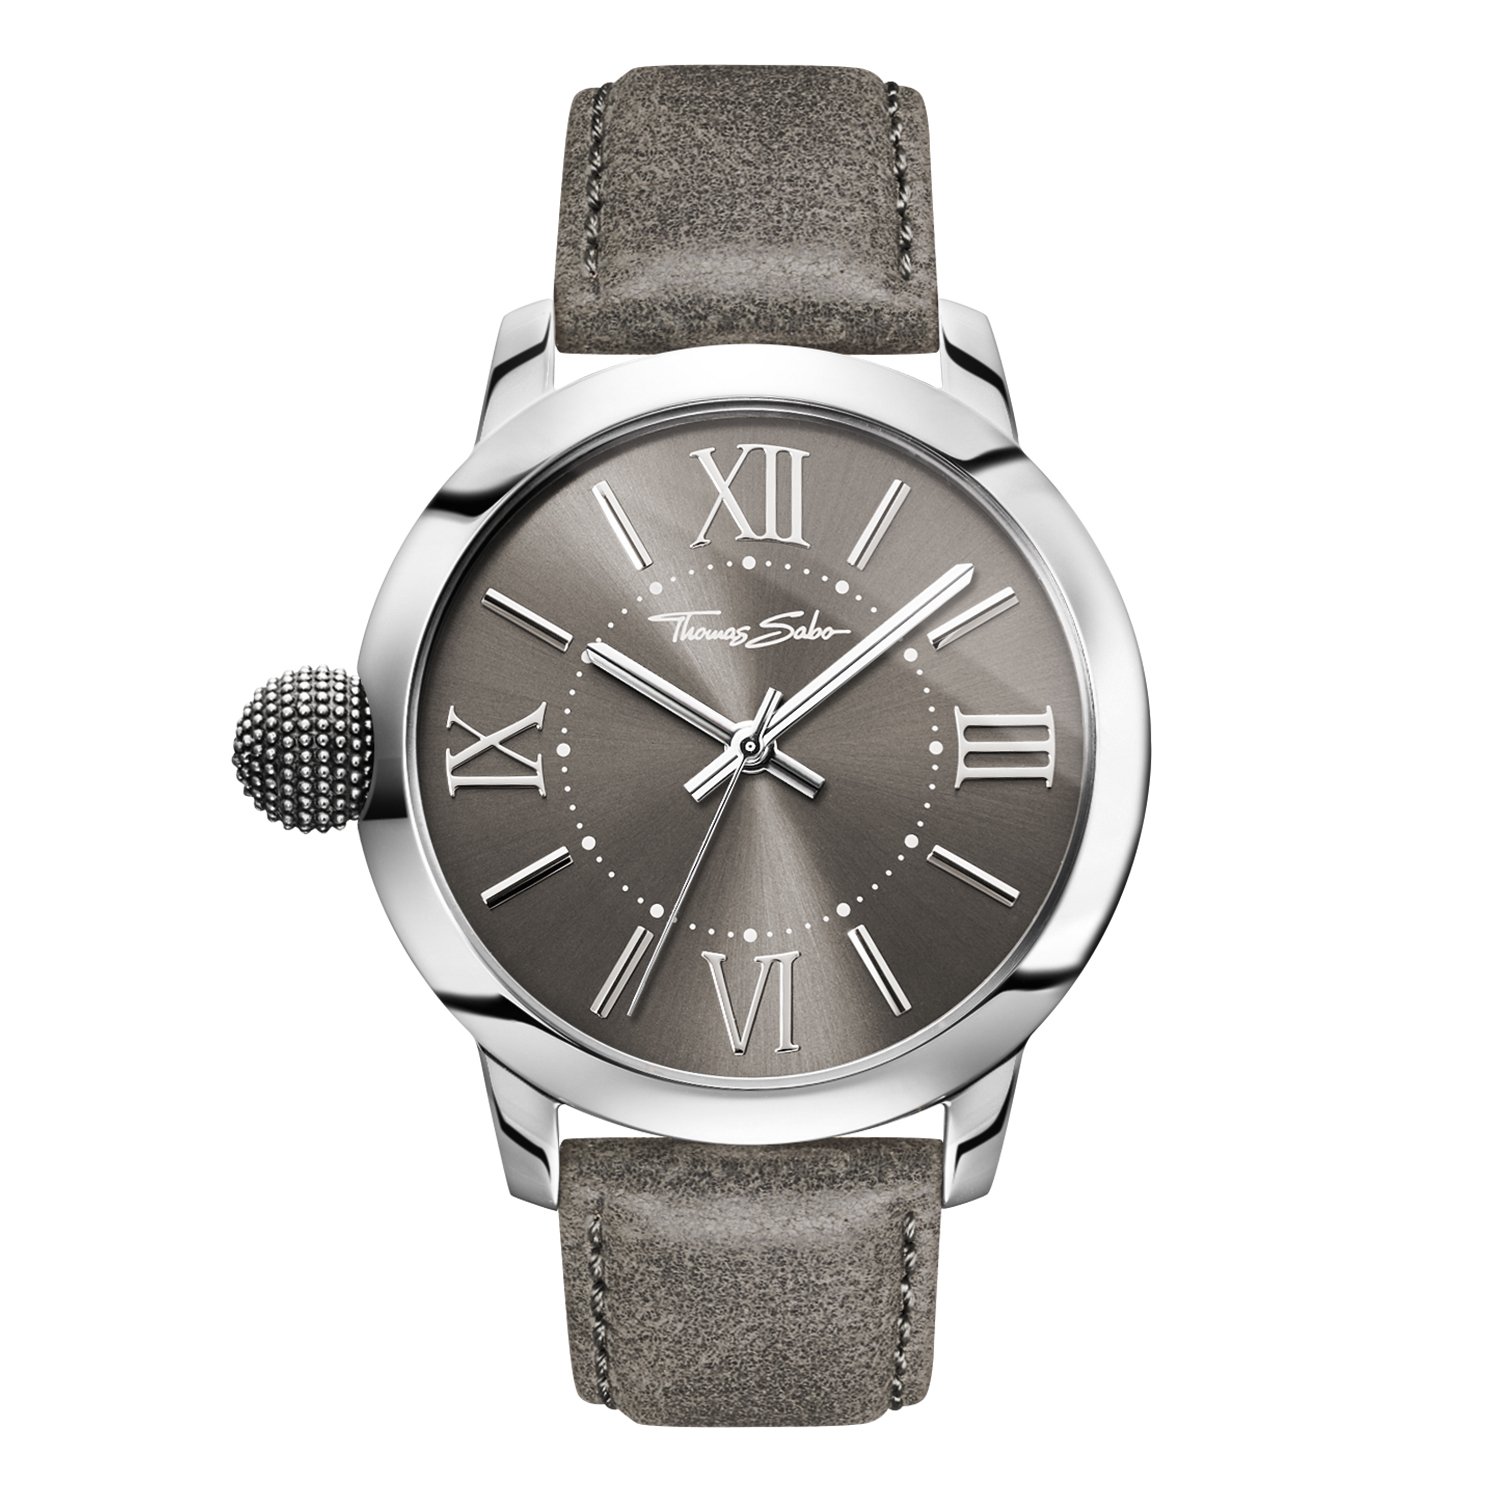 THOMAS SABO Herren Analog Quarz Uhr mit Leder Armband WA0294-273-210-46 mm